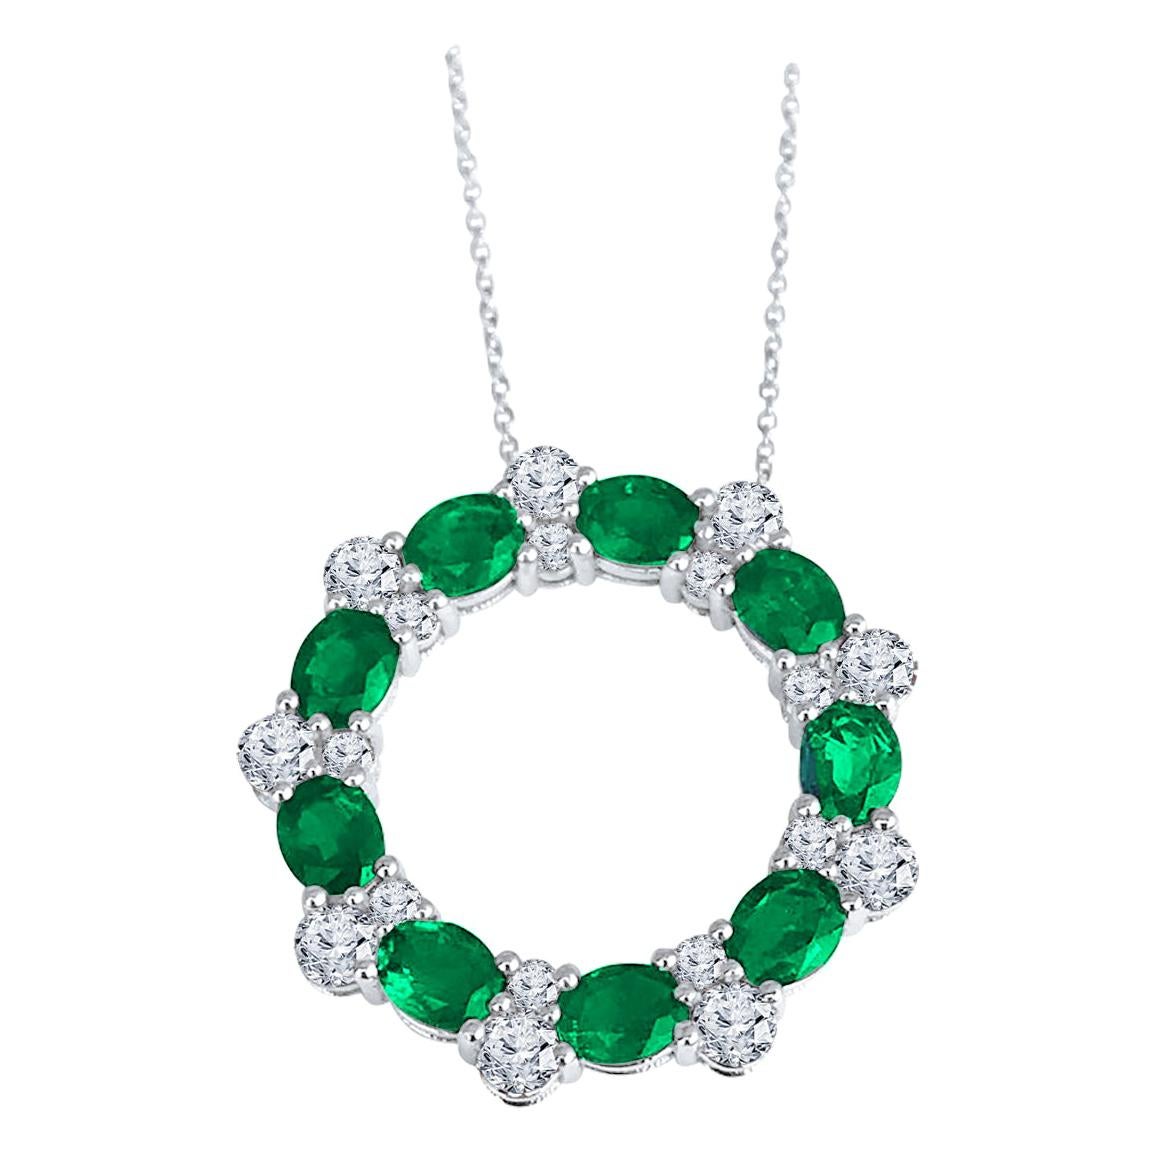 DiamondTown 2.75 Carat Oval Cut Emerald and Diamond Pendant in 18k White Gold